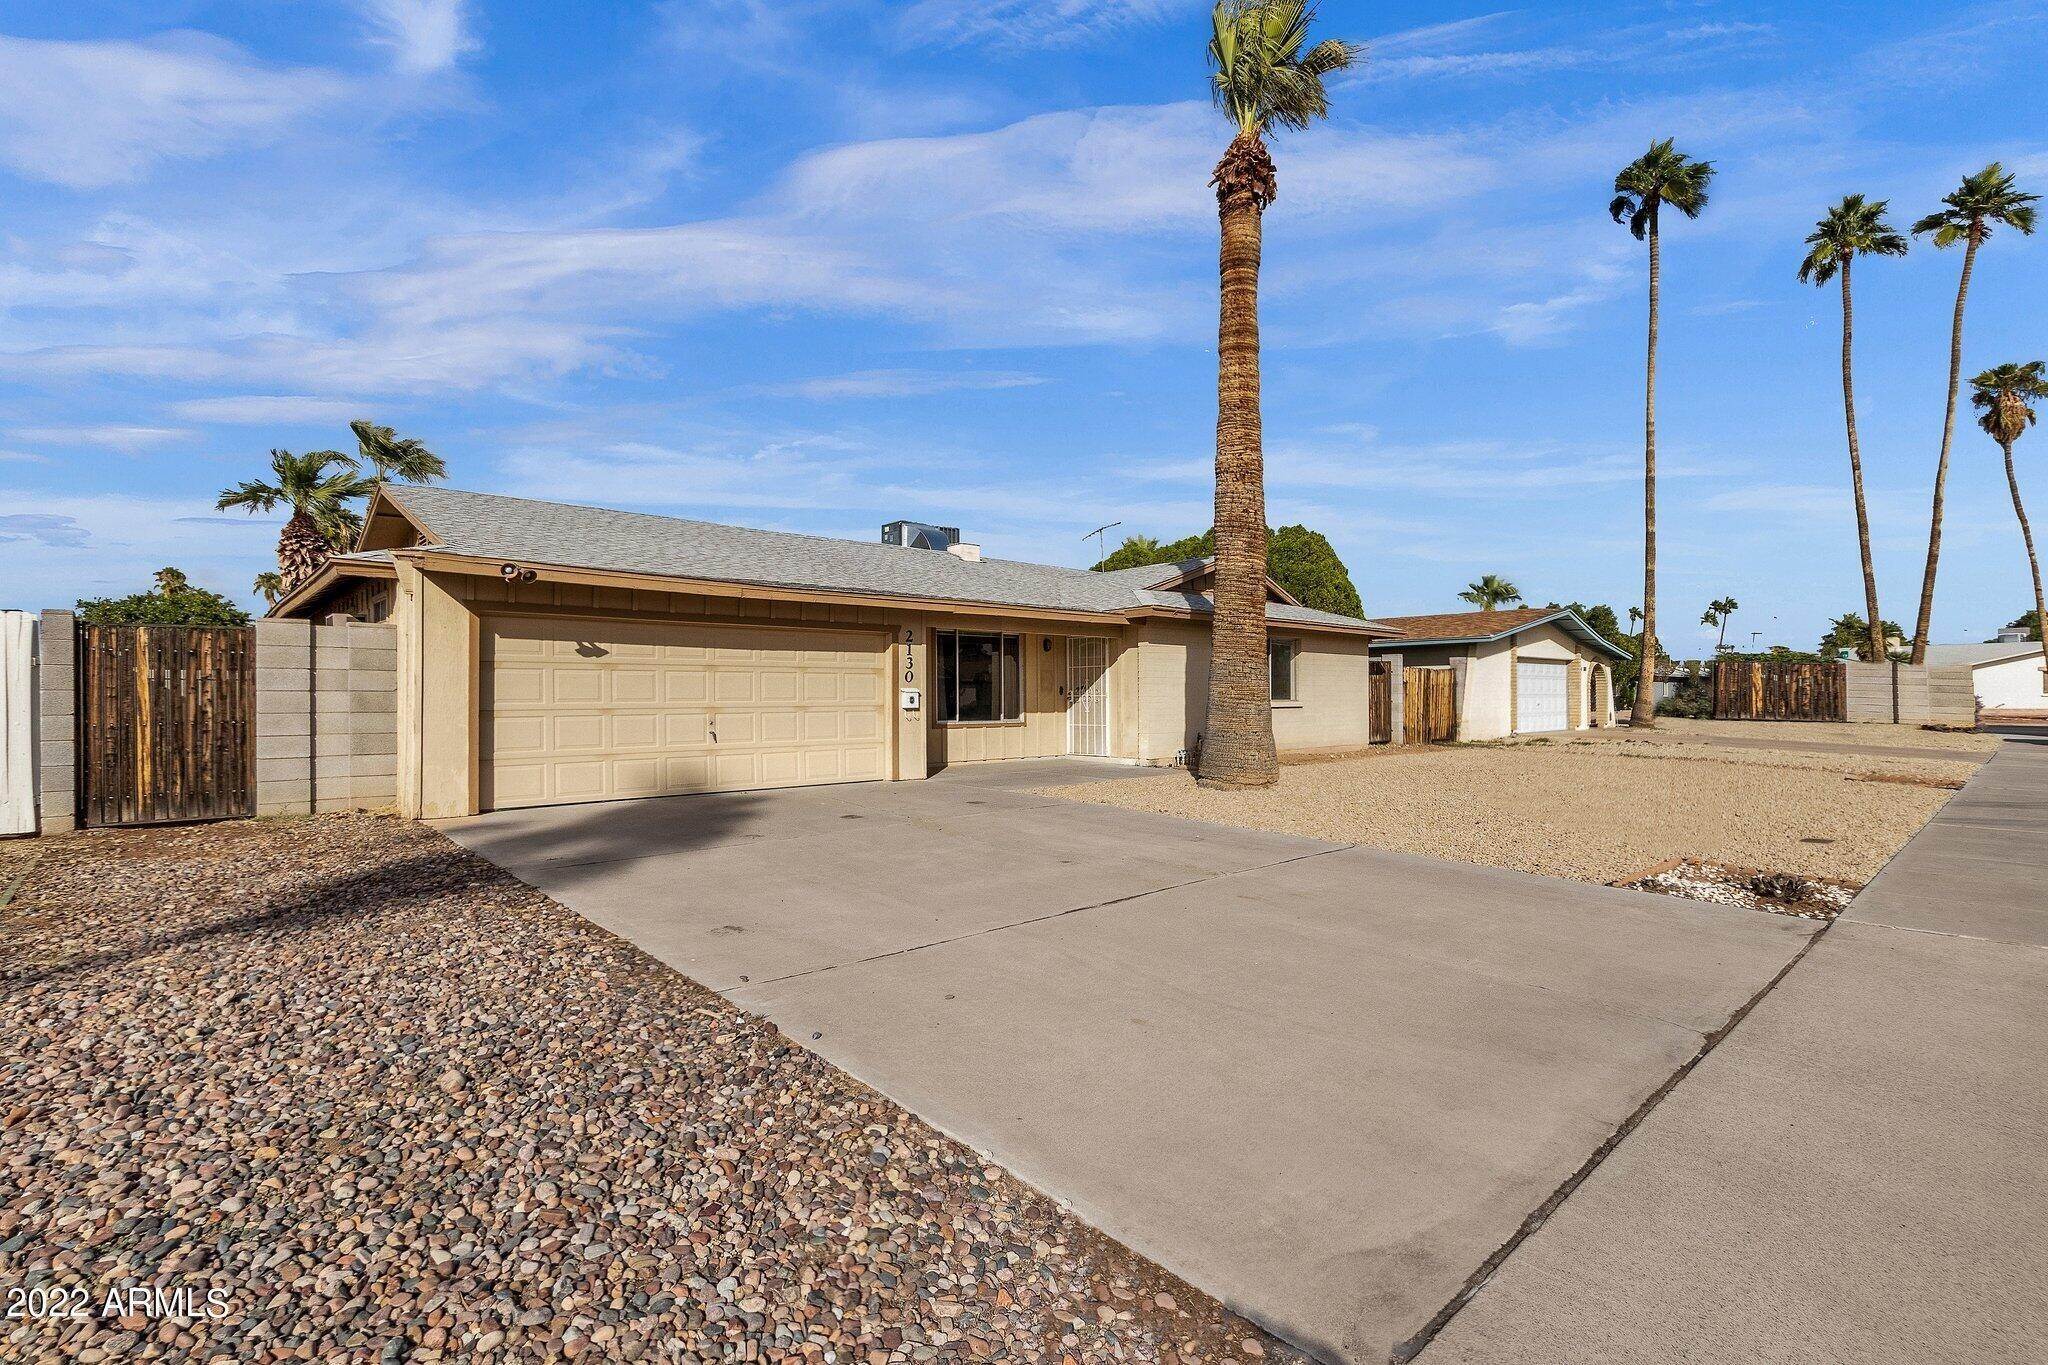 1. Single Family for Sale at Mesa, AZ 85202